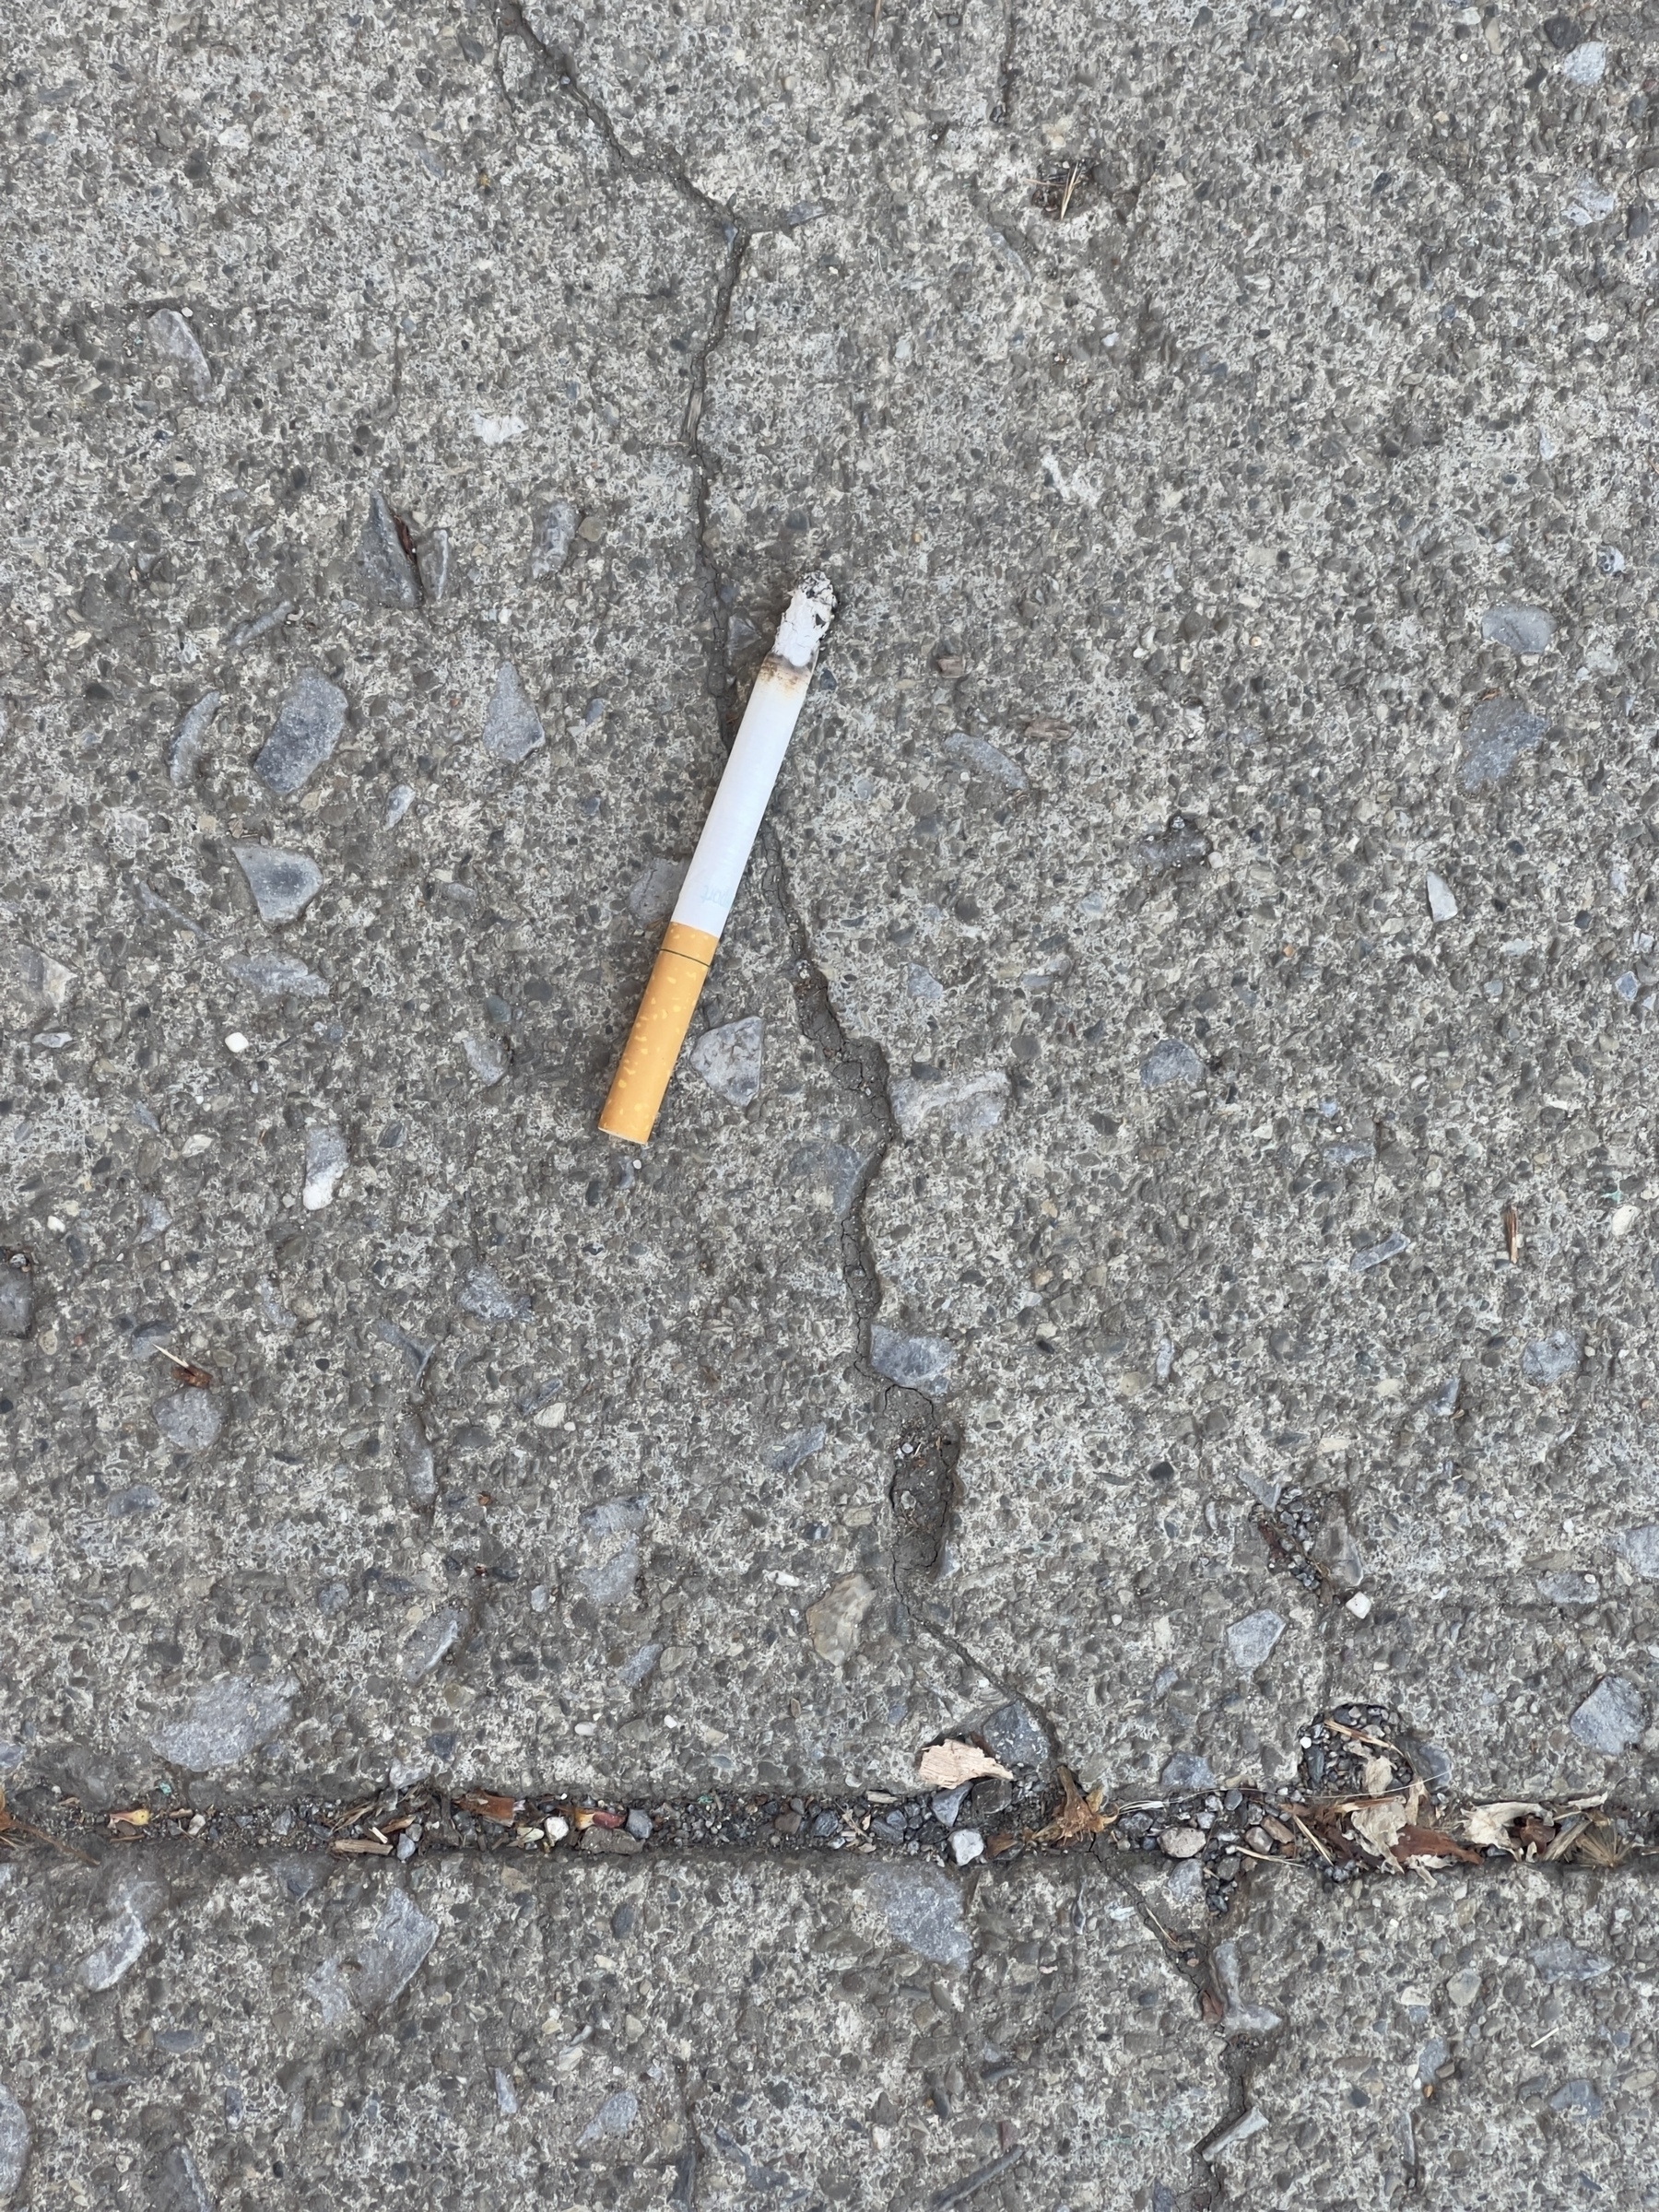 Partially burned cigarette on concrete sidewalk.